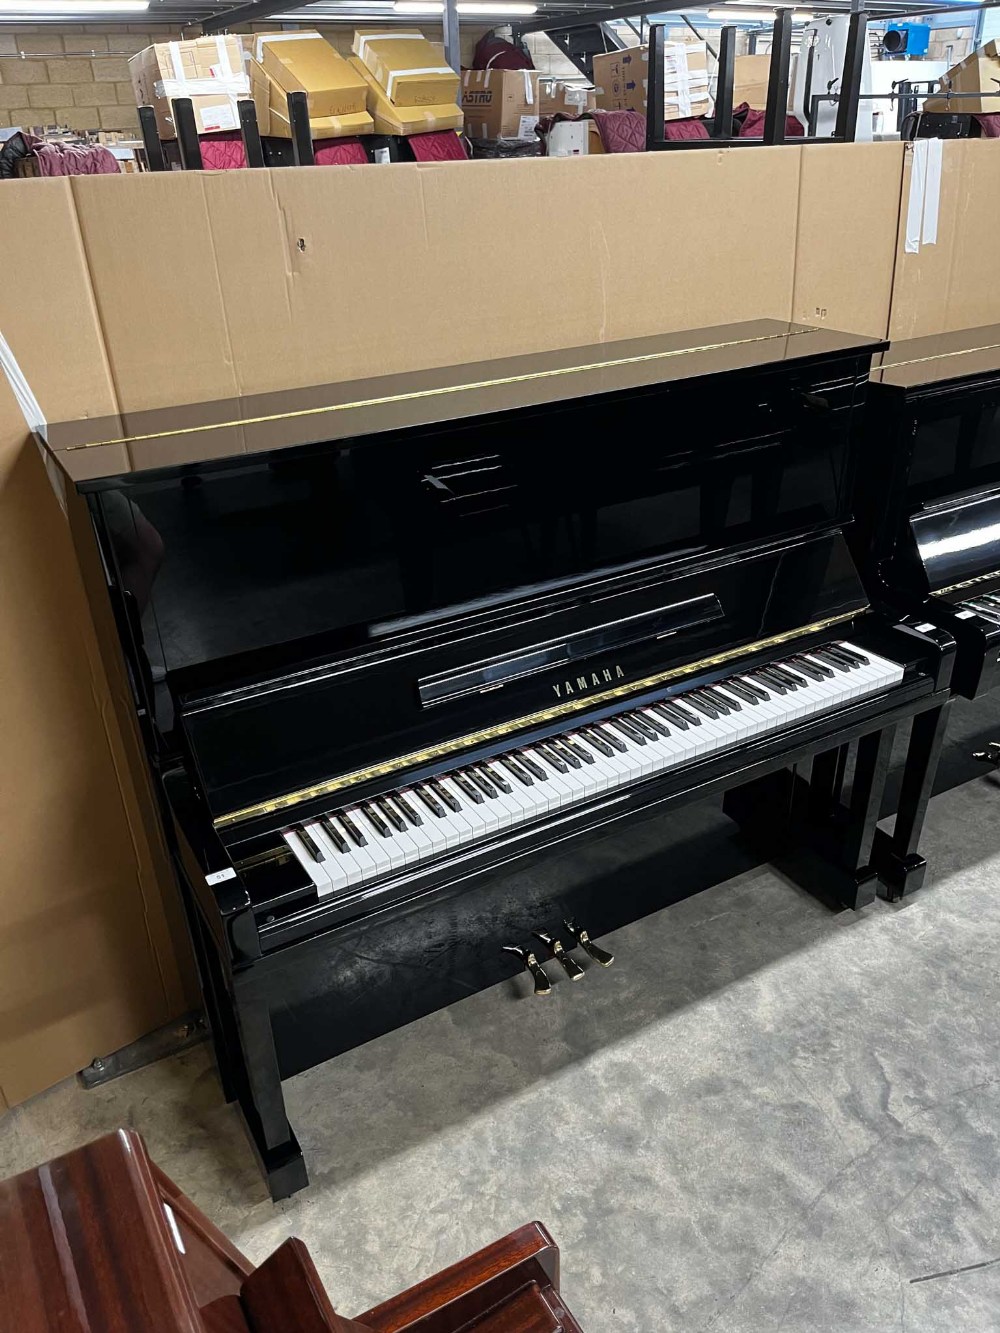 Yamaha (c1987) A 131cm Model U30BL upright piano in a traditional bright ebonised